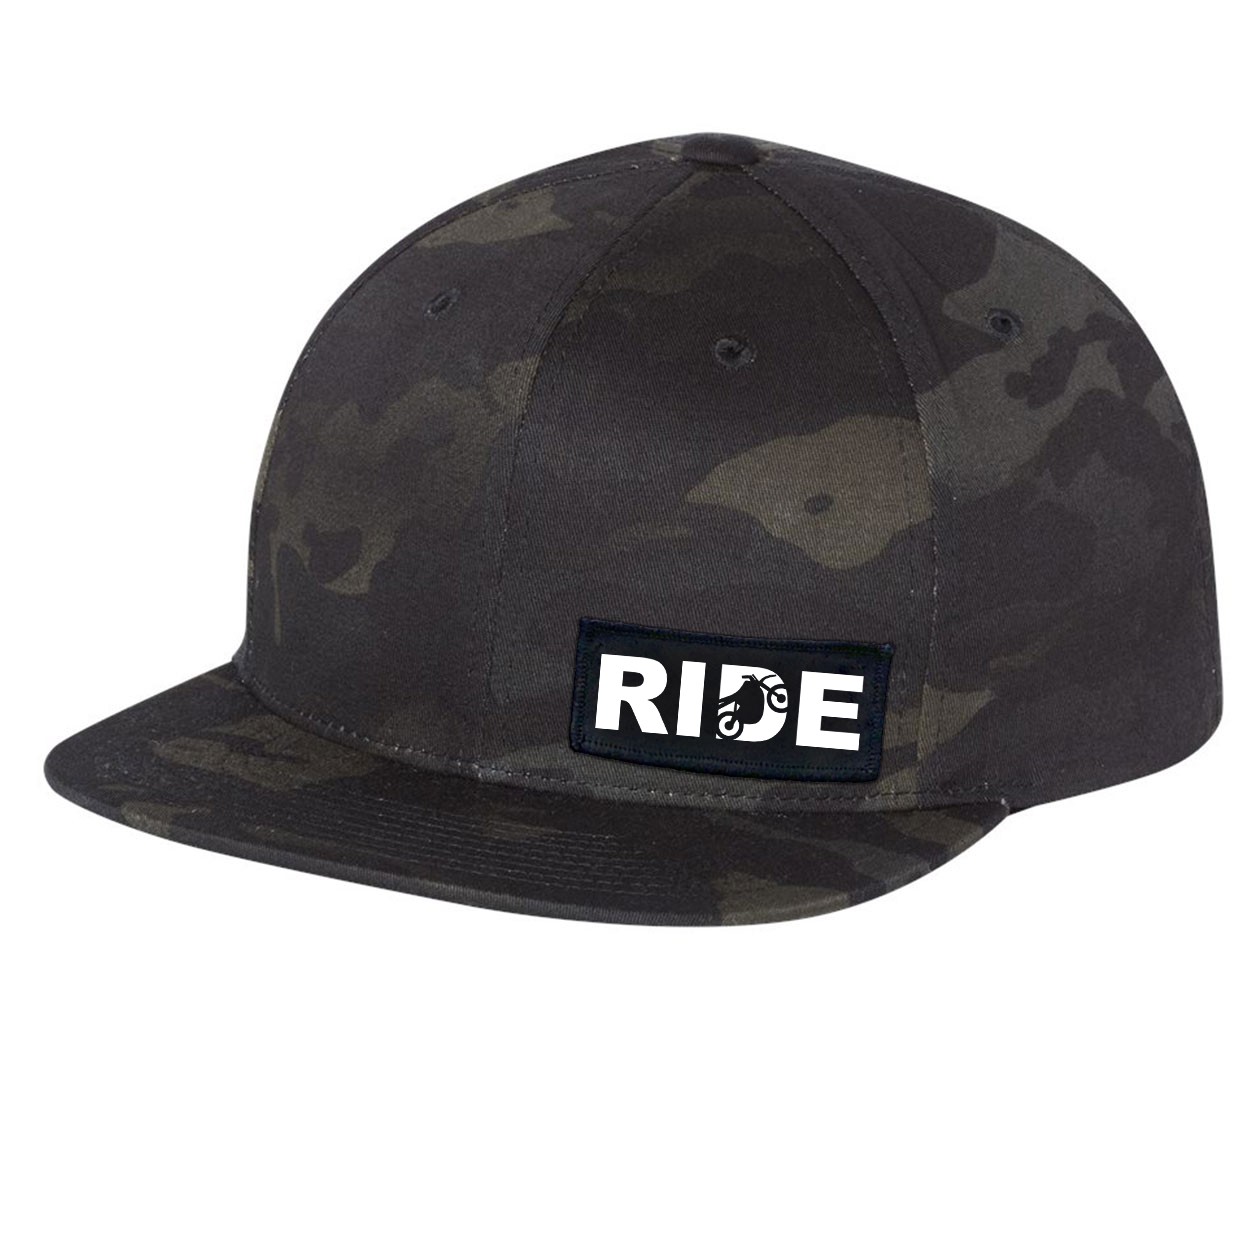 Ride Moto Logo Night Out Woven Patch Flat Brim Snapback Hat Black Camo (White Logo)